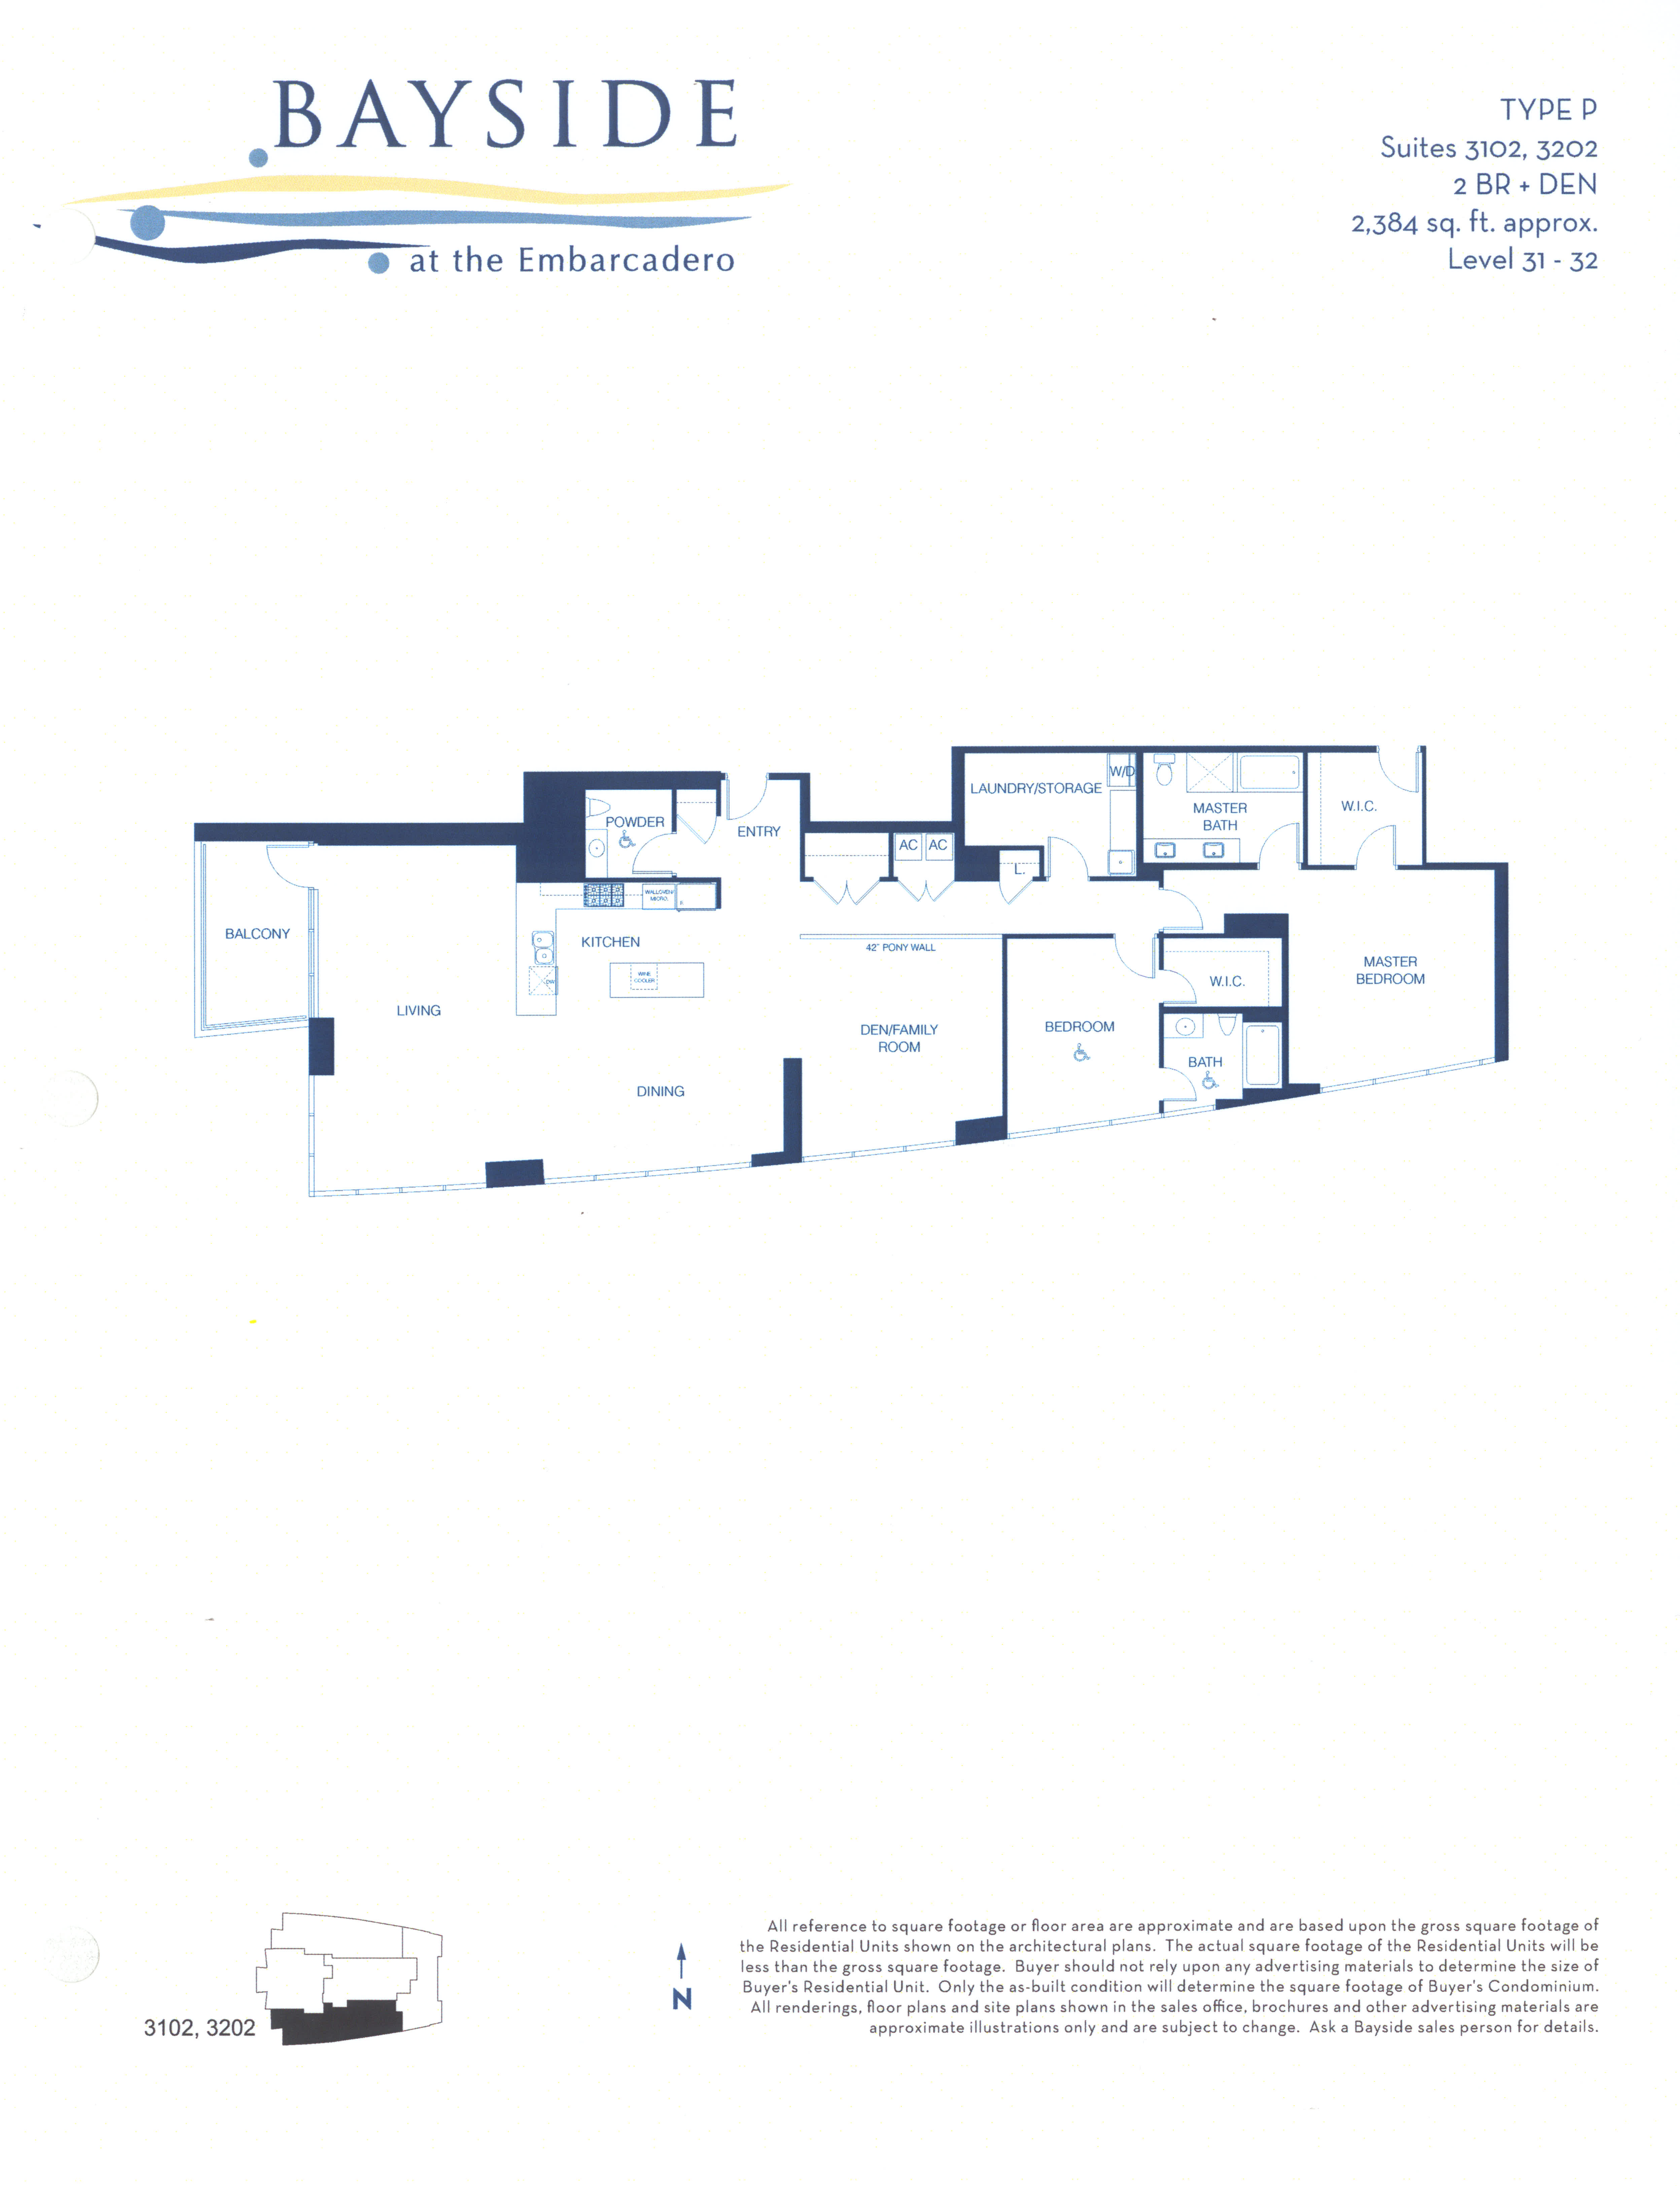 Bayside Floor Plan Level 31- 32 Type P